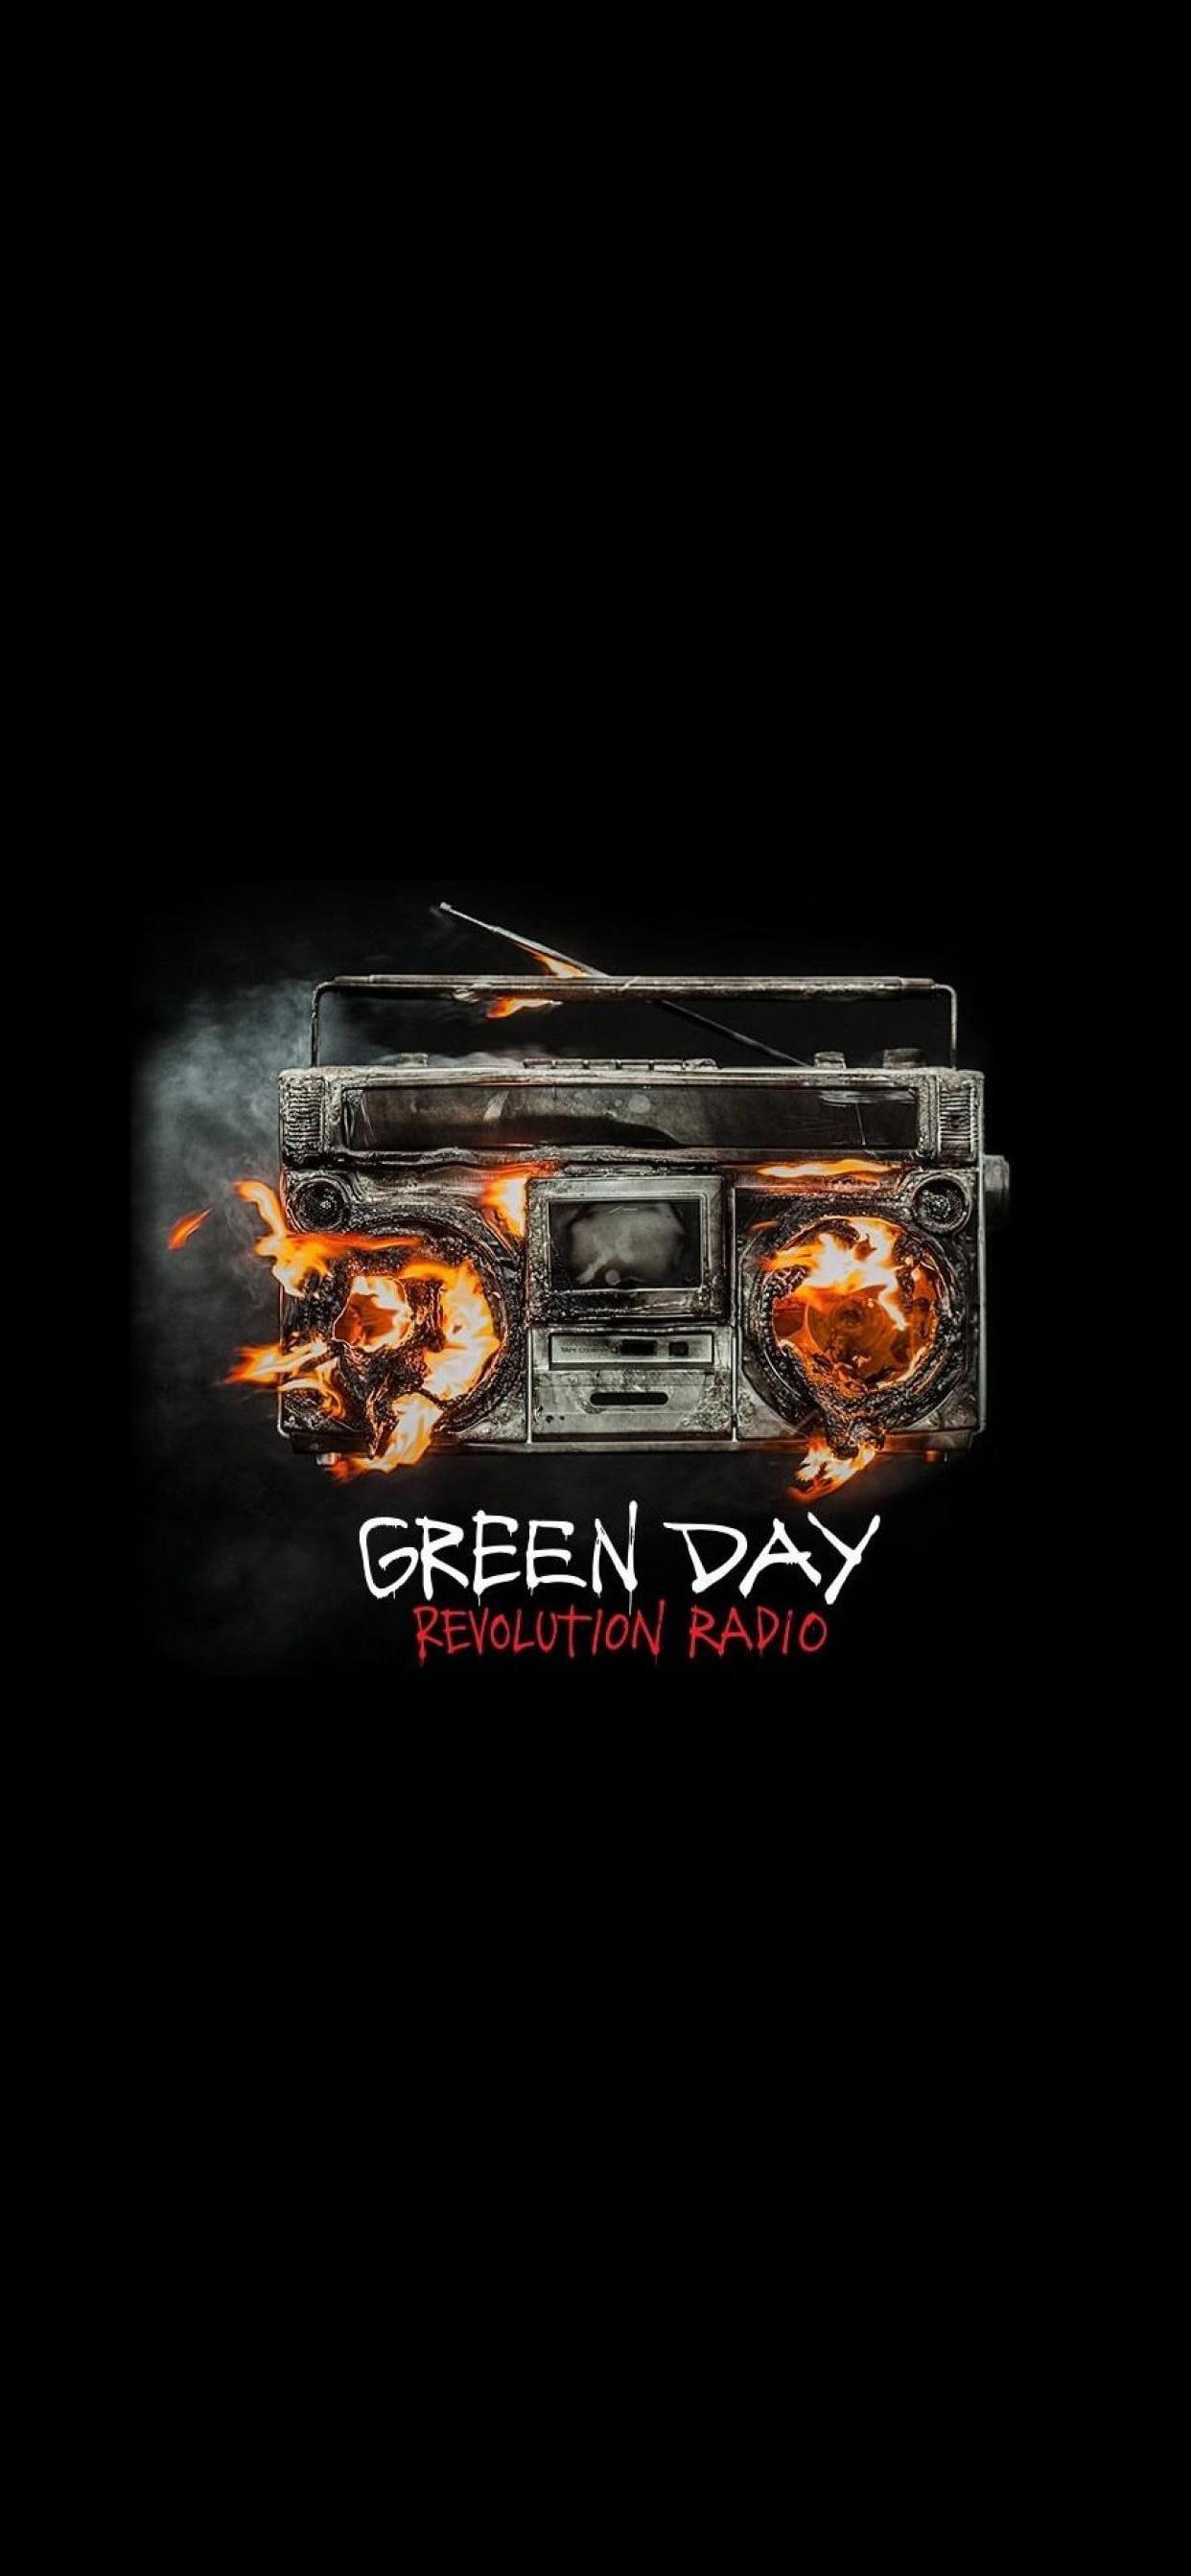 iPhone Wallpaper Of Album Covers R Greenday